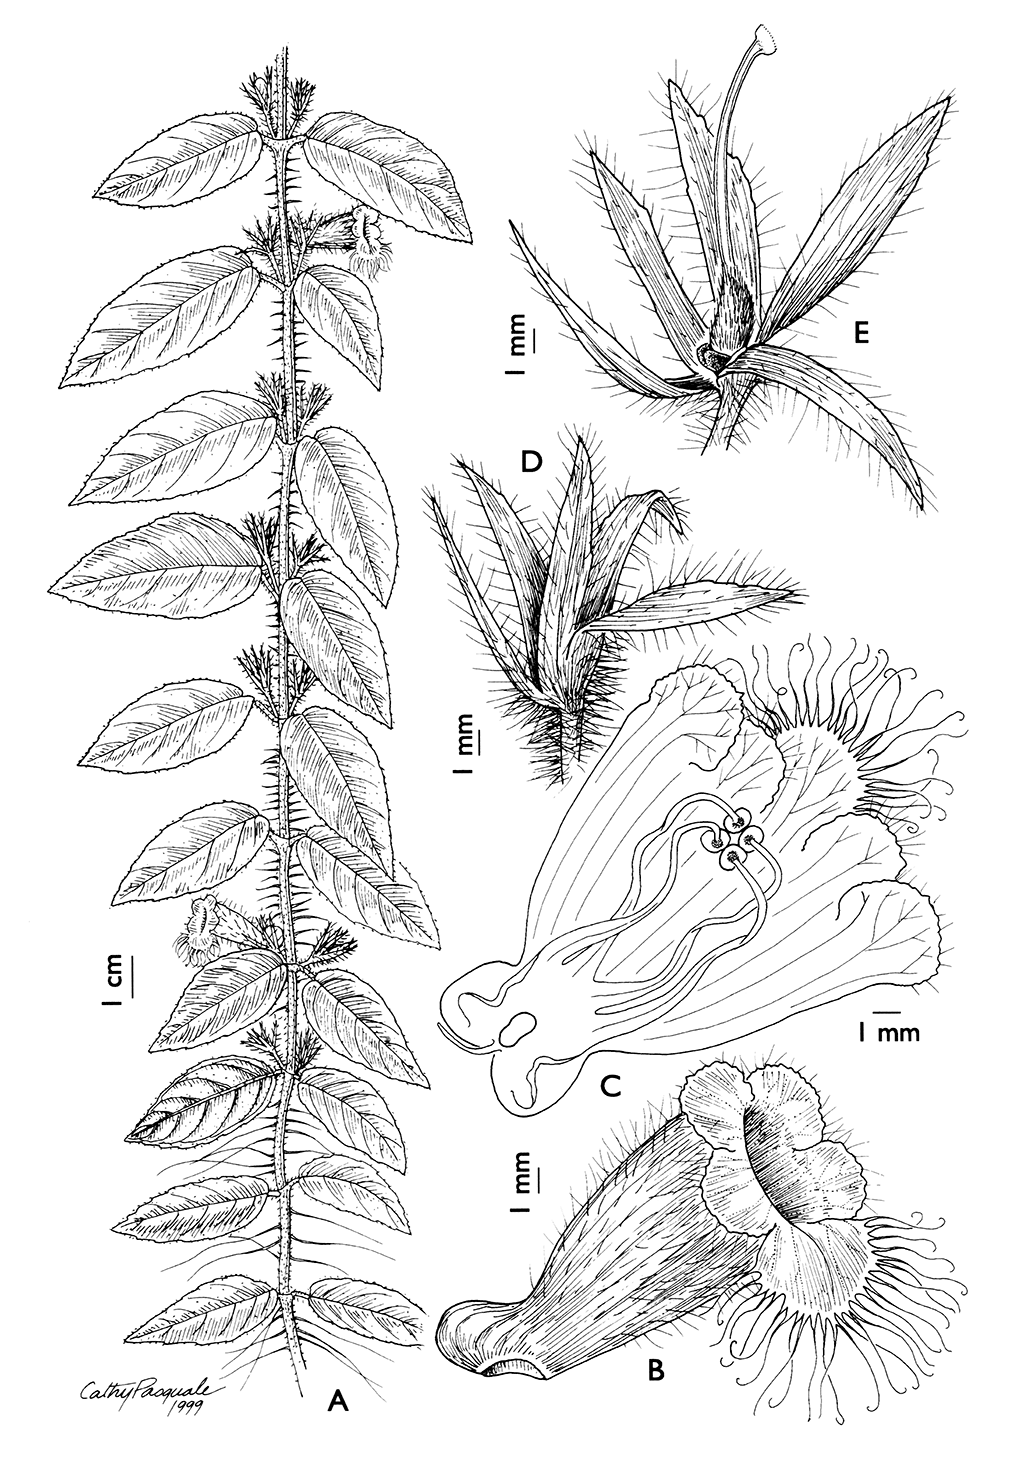 https://media.e-taxonomy.eu/flora-guianas/fotg-a-26-176.gif